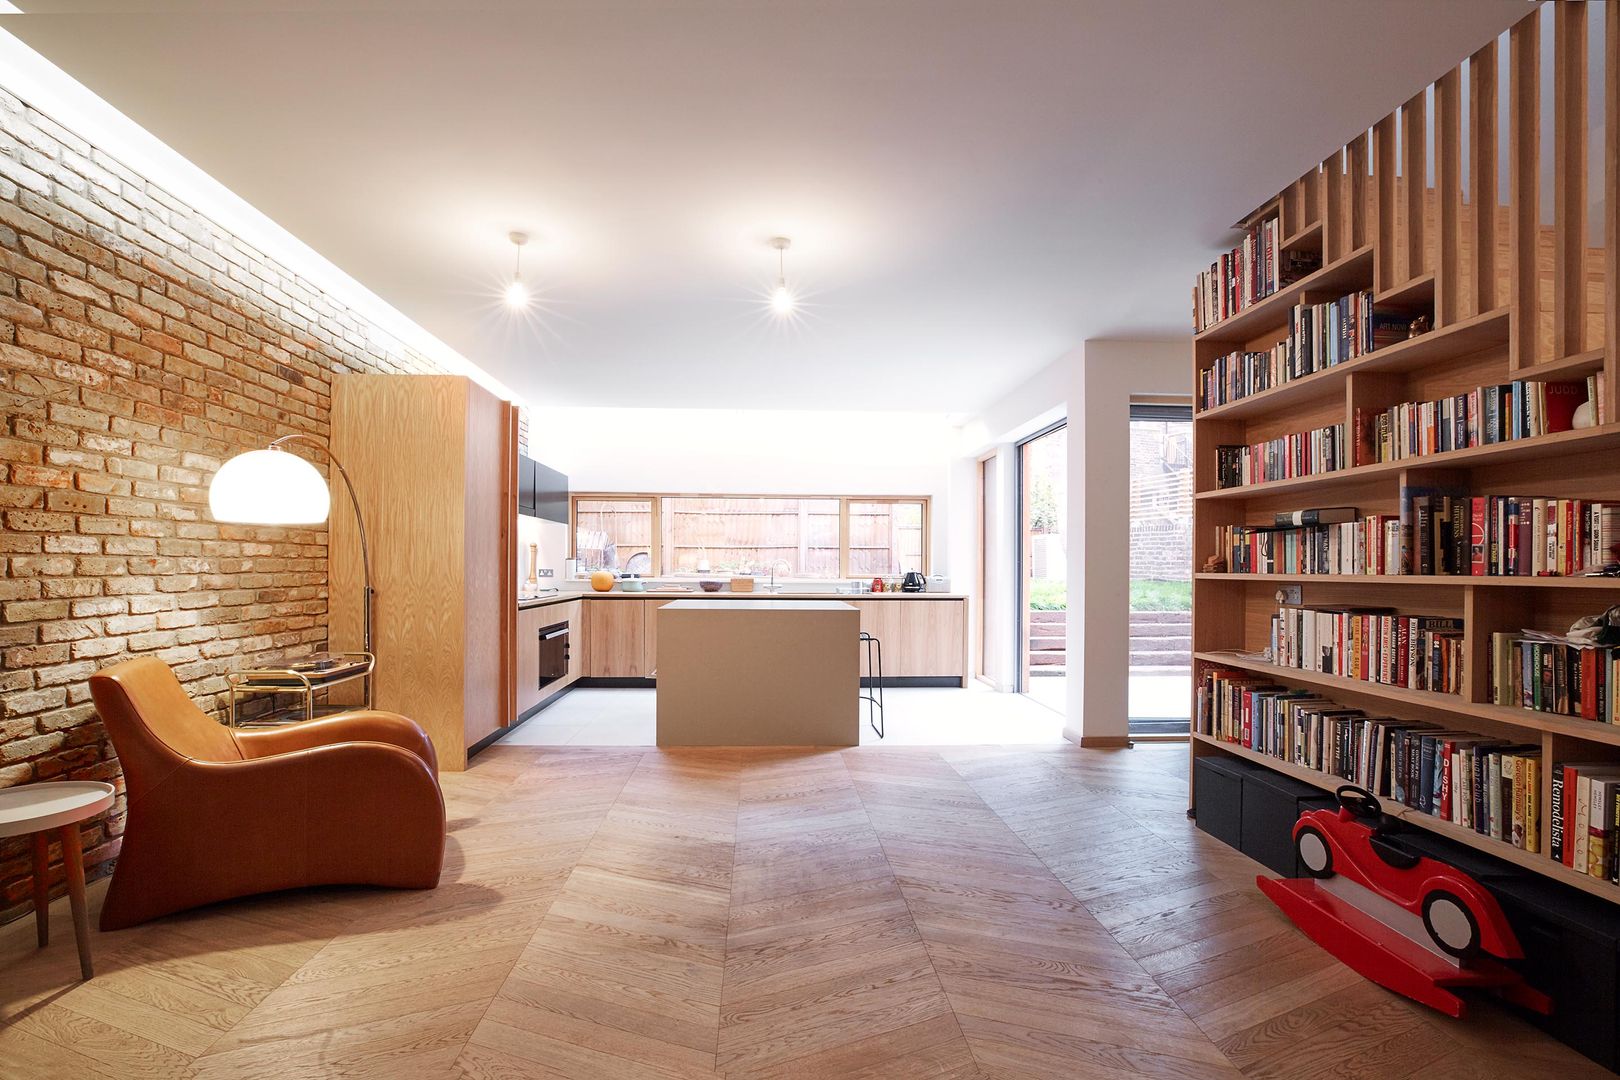 Private Residence - Scoble Place, London Designcubed Cocinas modernas: Ideas, imágenes y decoración lounge,kitchen